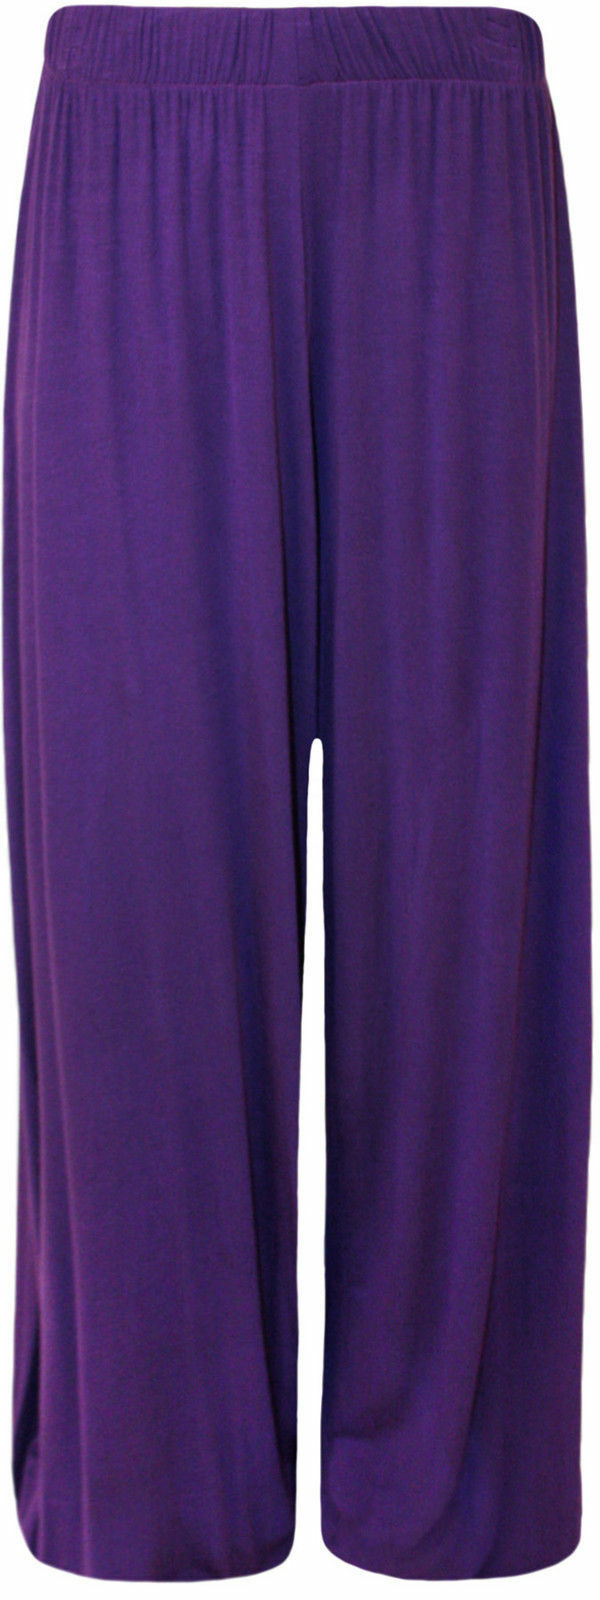 Ladies Wide Leg Purple Palazzo Pants.